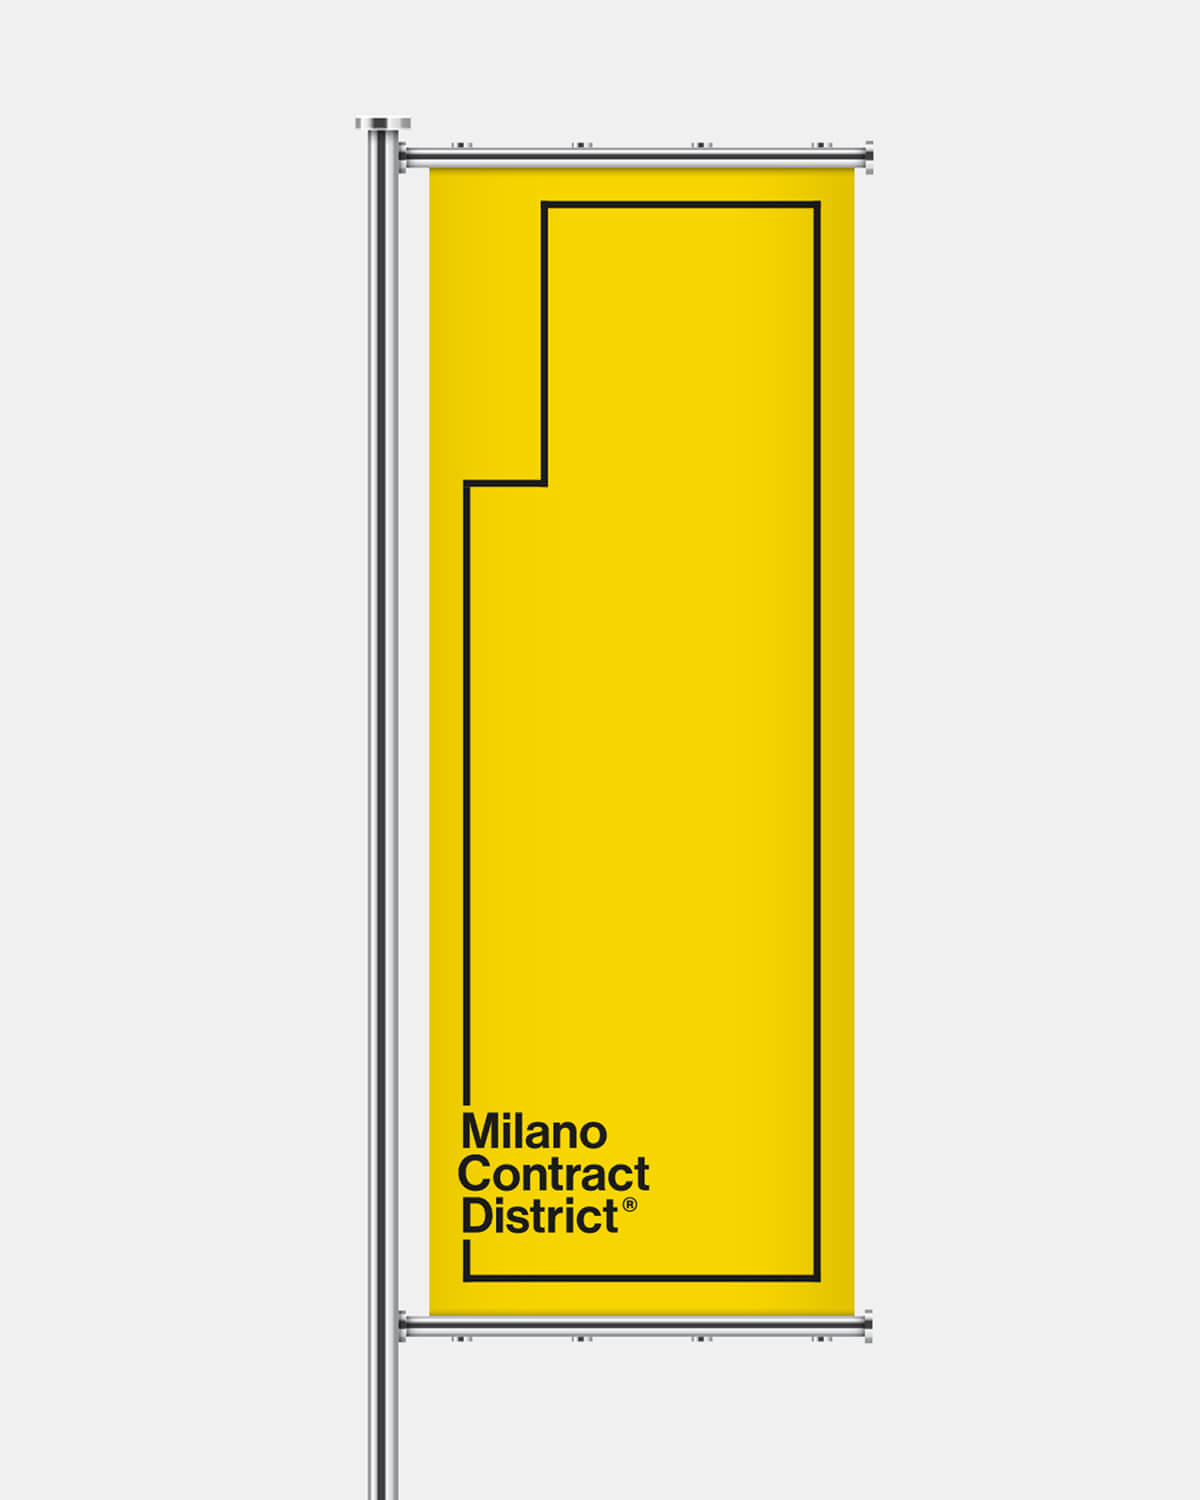 Luca_Fontana_Milano_Contract_District_7